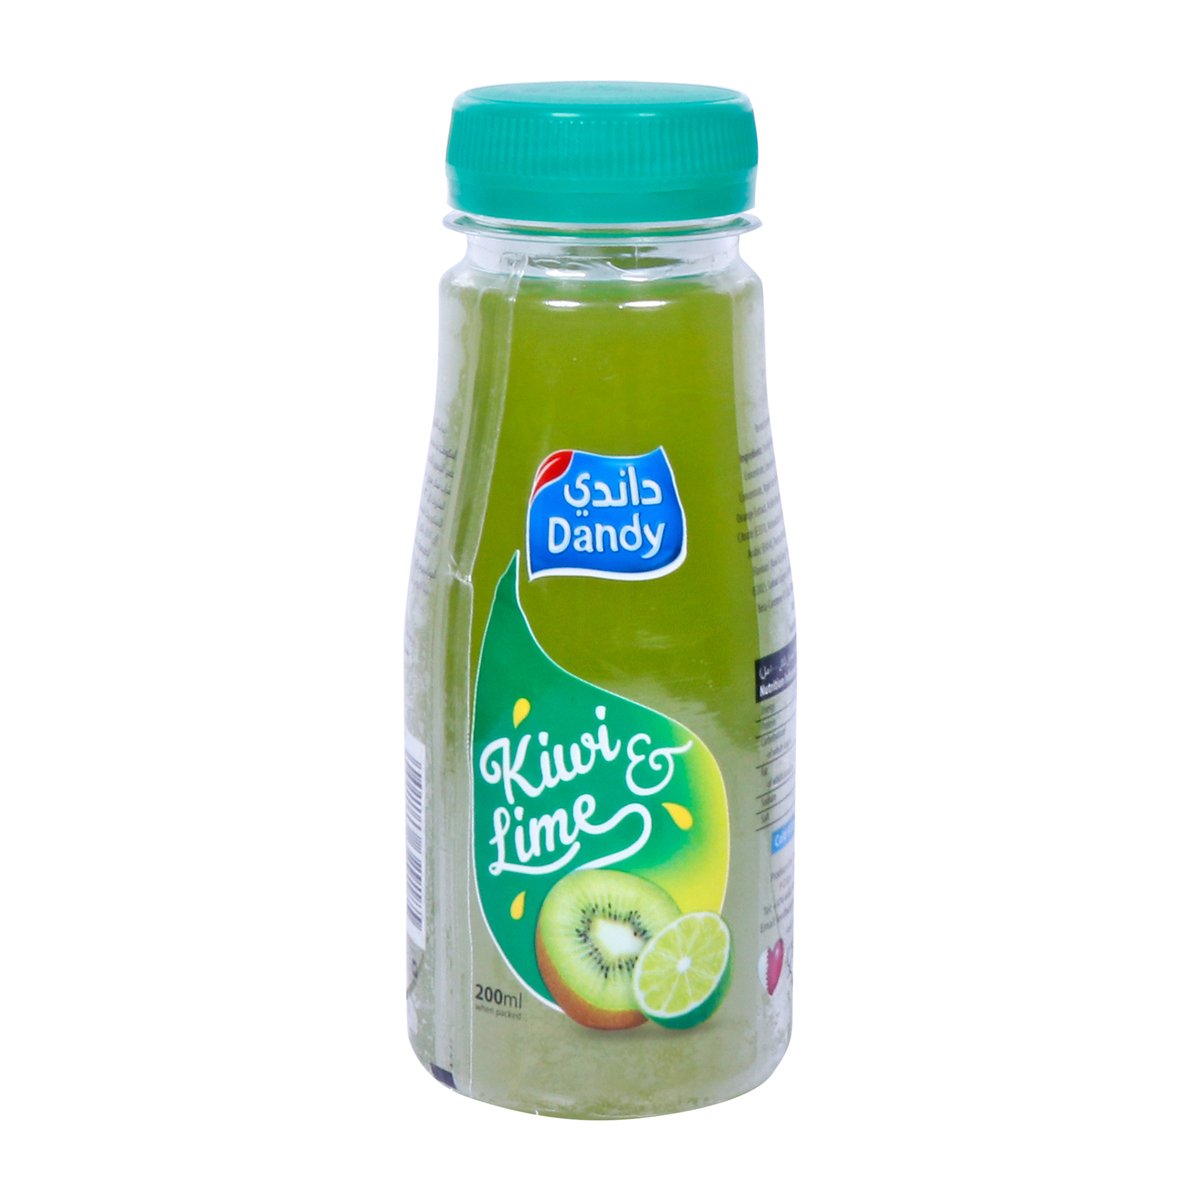 Dandy Kiwi Lime Juice 200ml